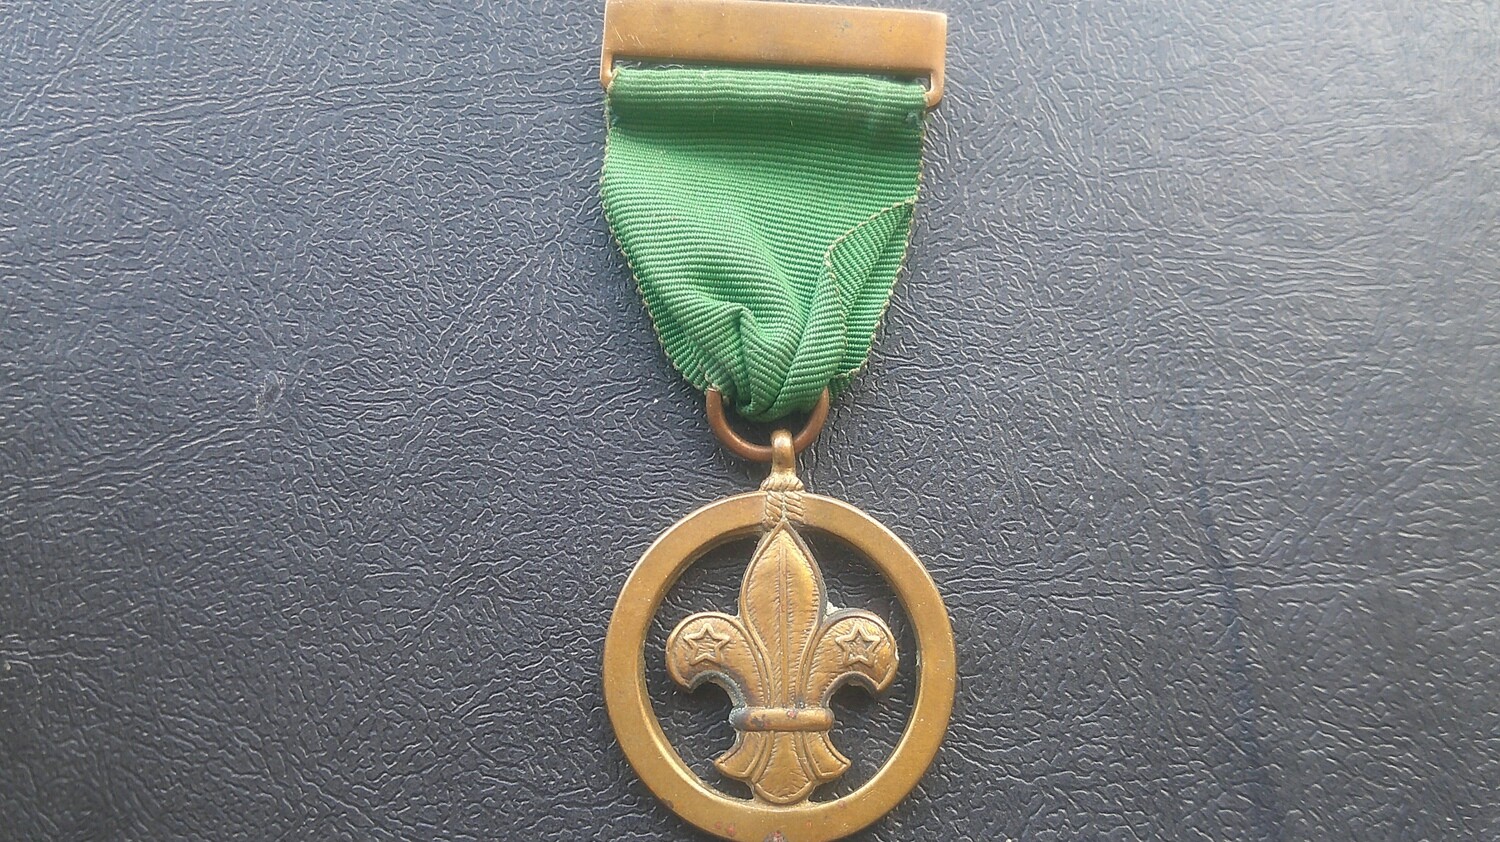 Boy Scout Medal of Merit - 1958